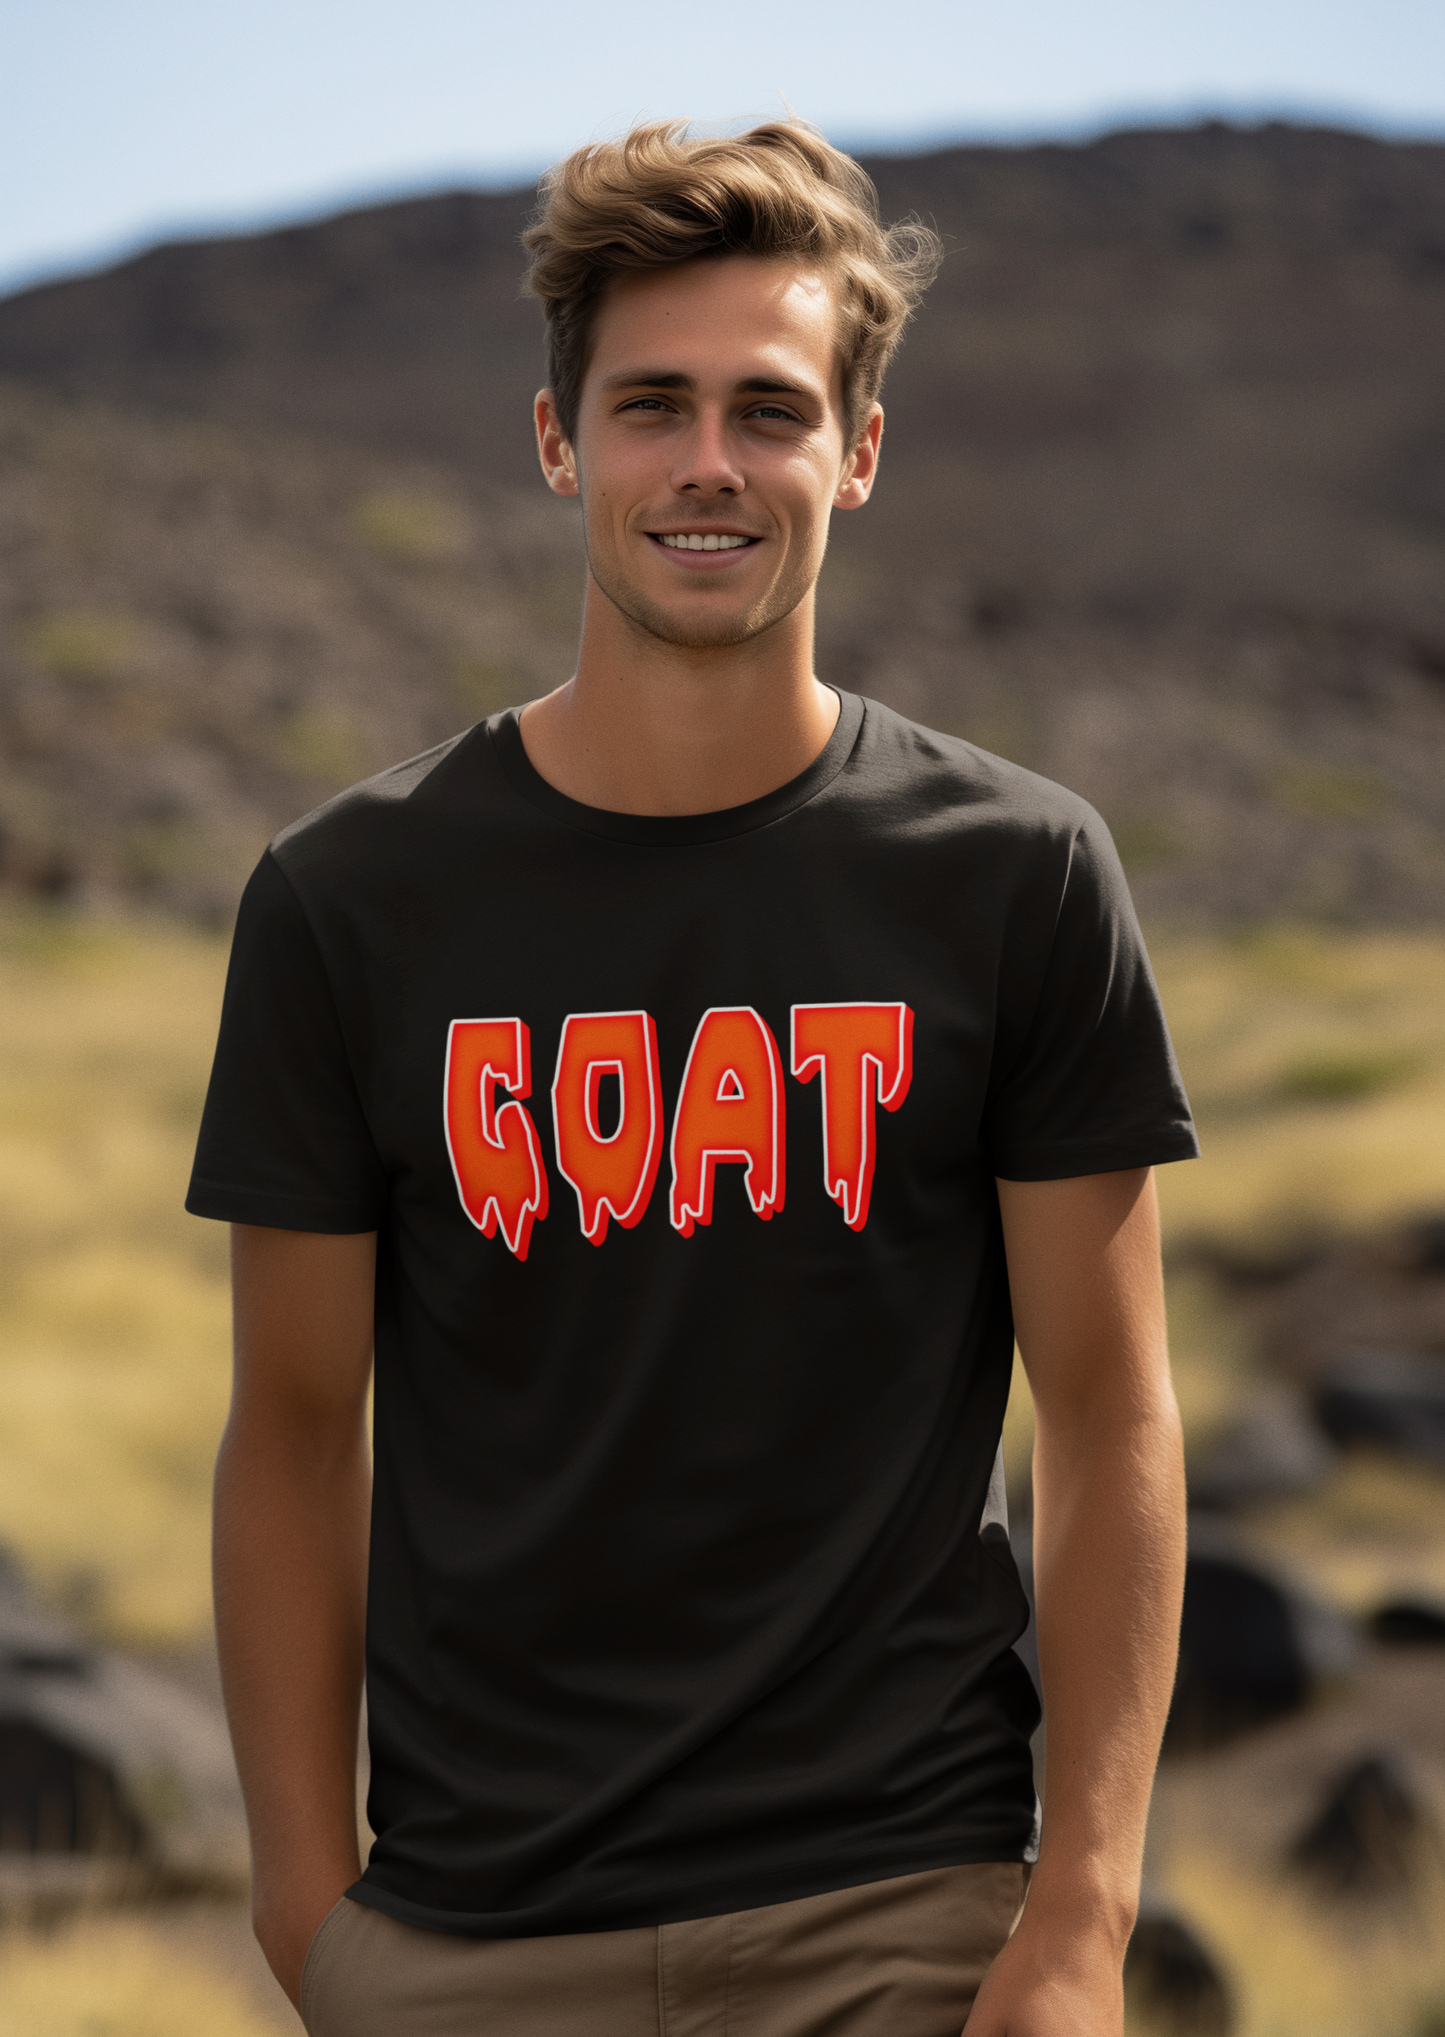 Goat T-Shirt Unisex